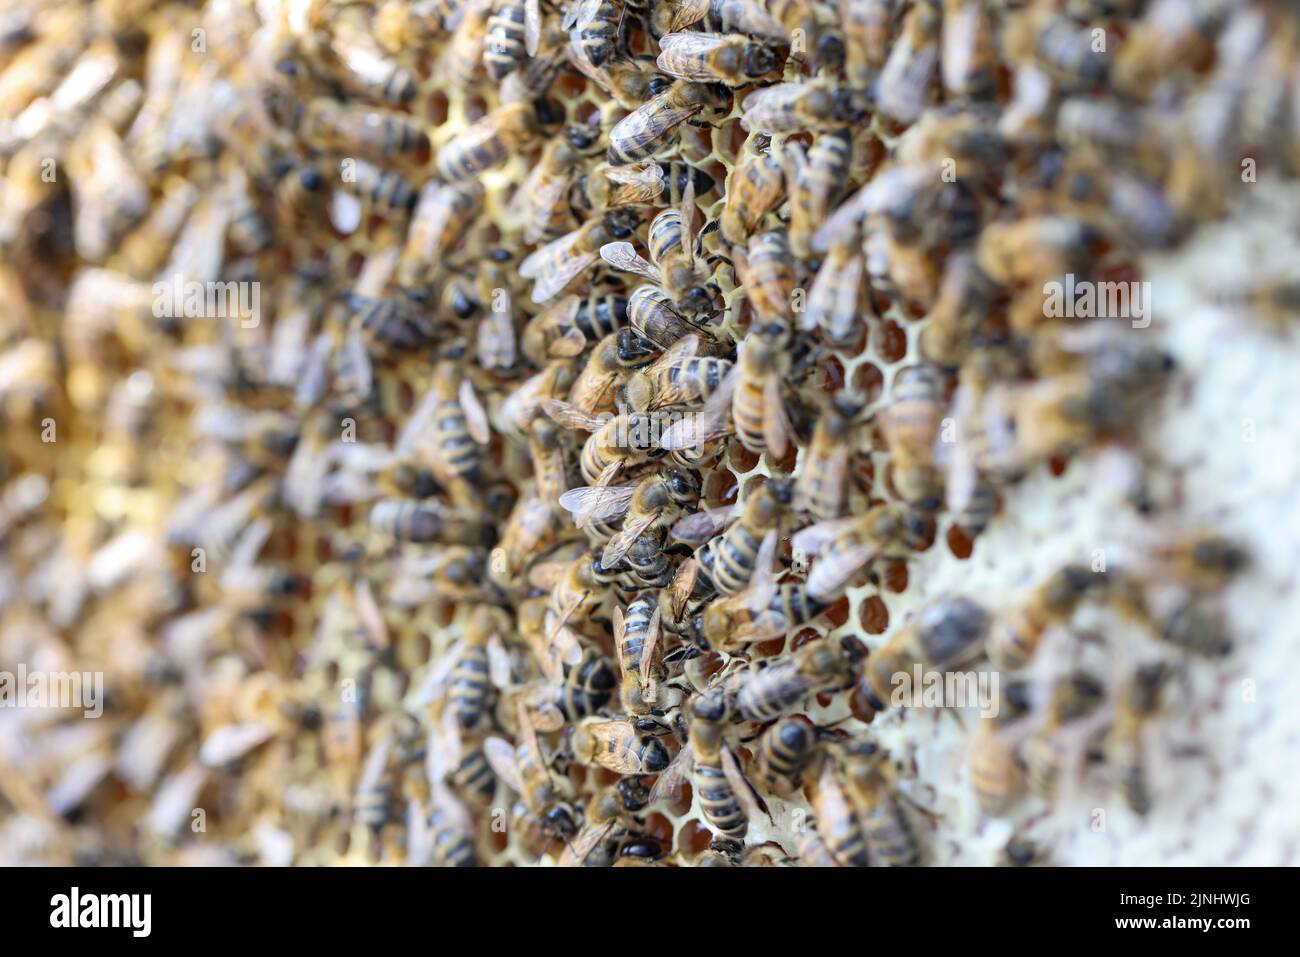 Marco de panal con familia de abejas, enjambre de abejas recolectando néctar Foto de stock